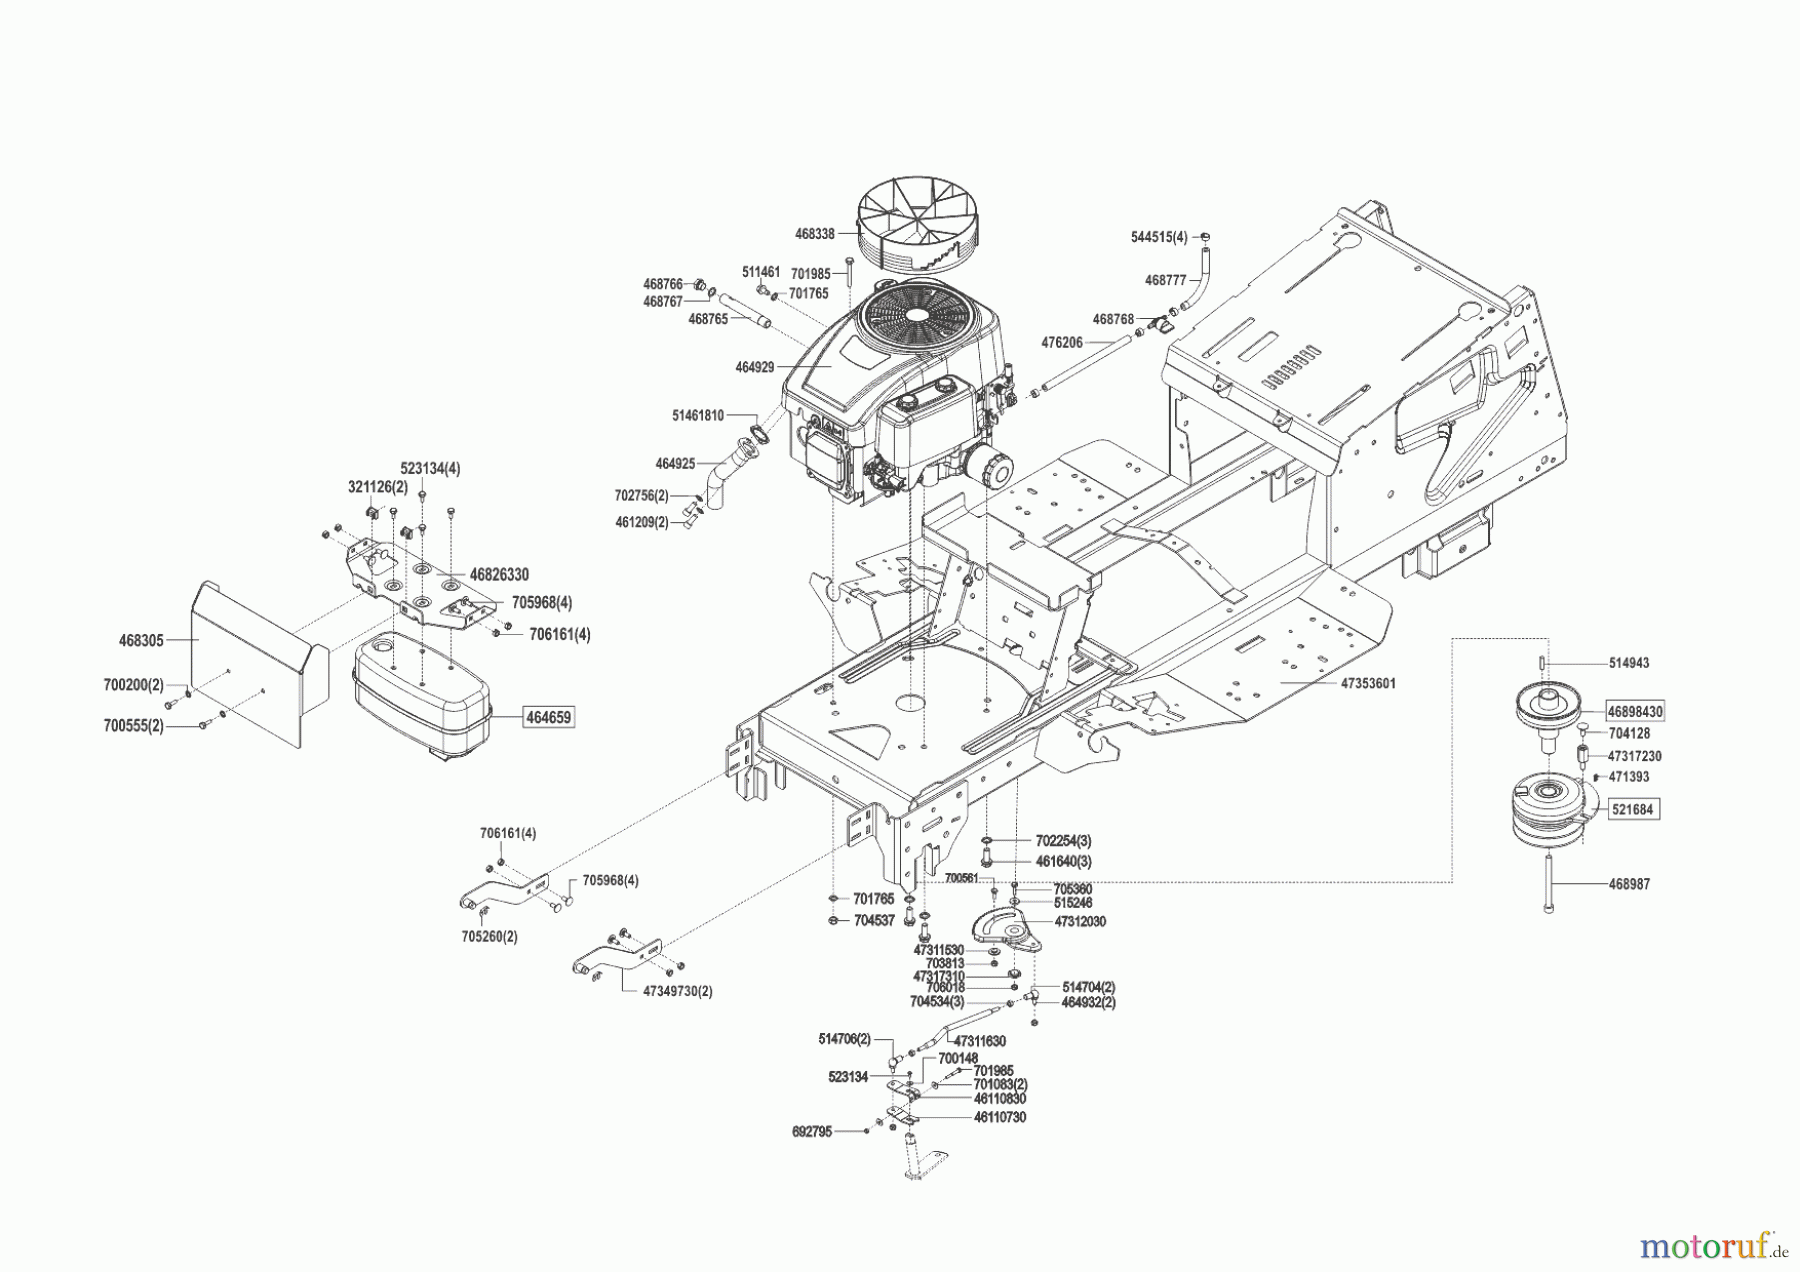  Powerline Gartentechnik Rasentraktor T 15-95.4 HD-A  09/2014 - 03/2016 Seite 2